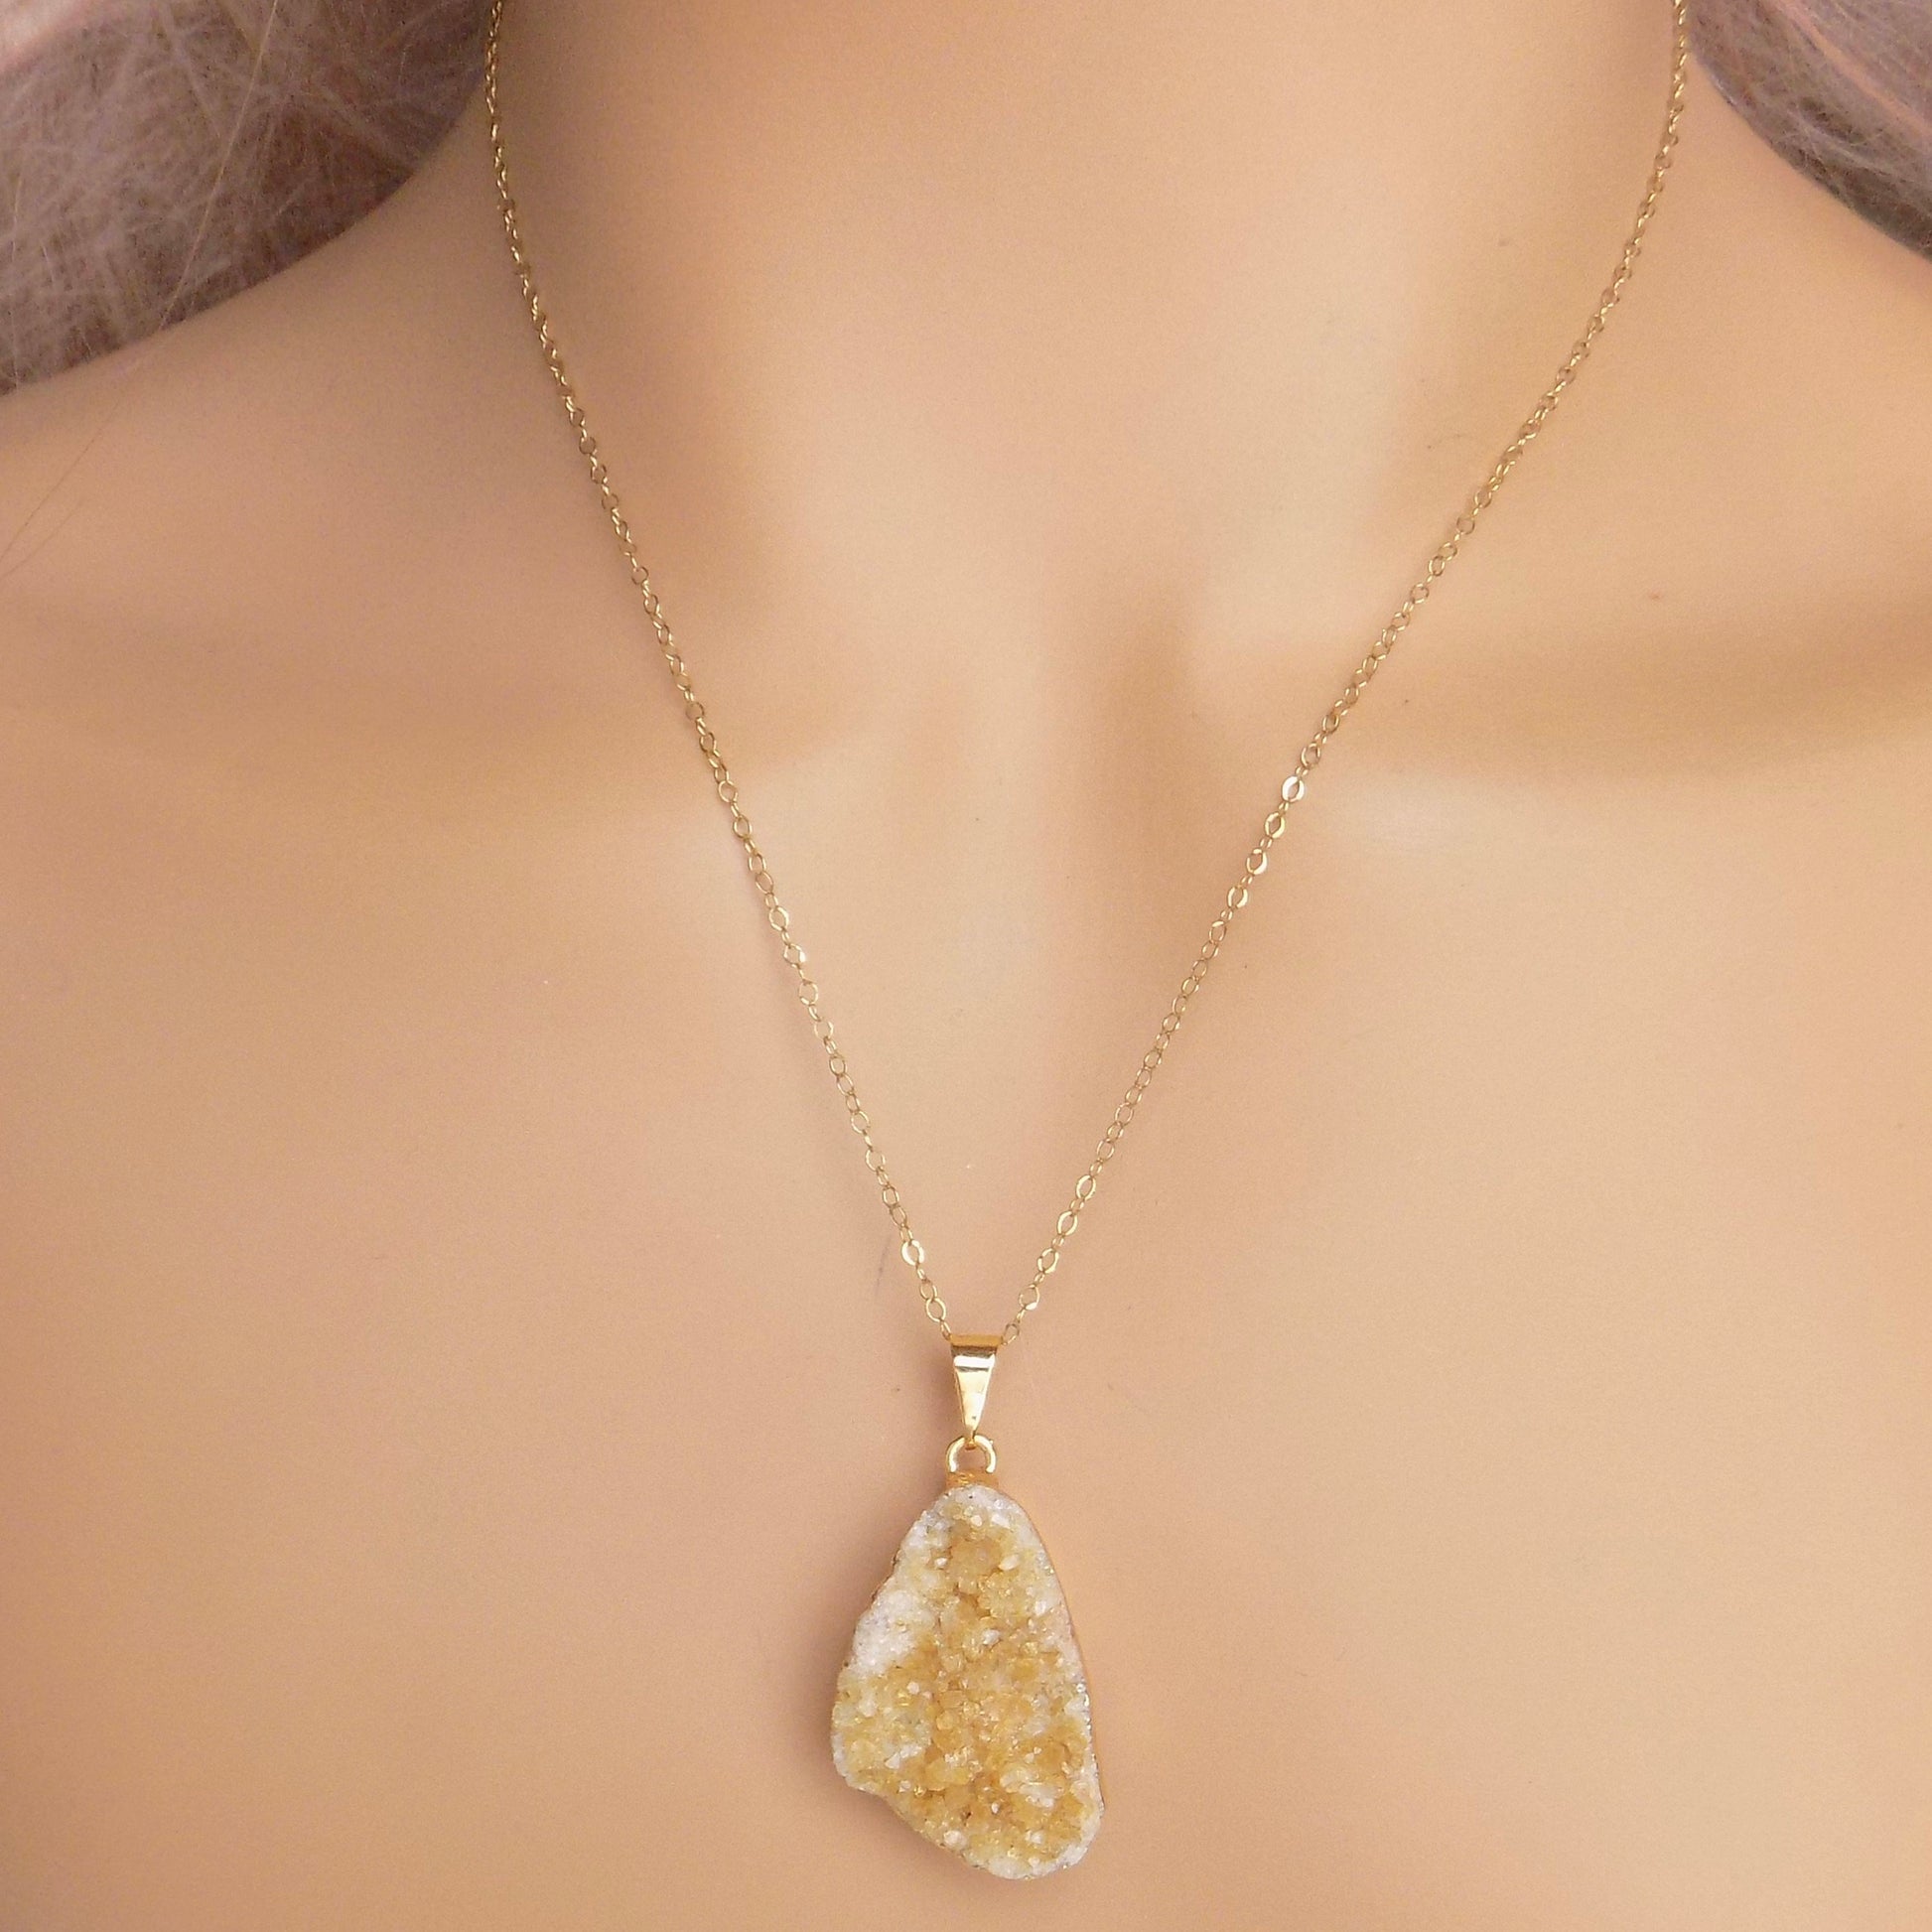 Yellow Citrine Druzy Necklace Gold - Citrine Crystal Pendant - November Birthstone Jewelry - G15-251